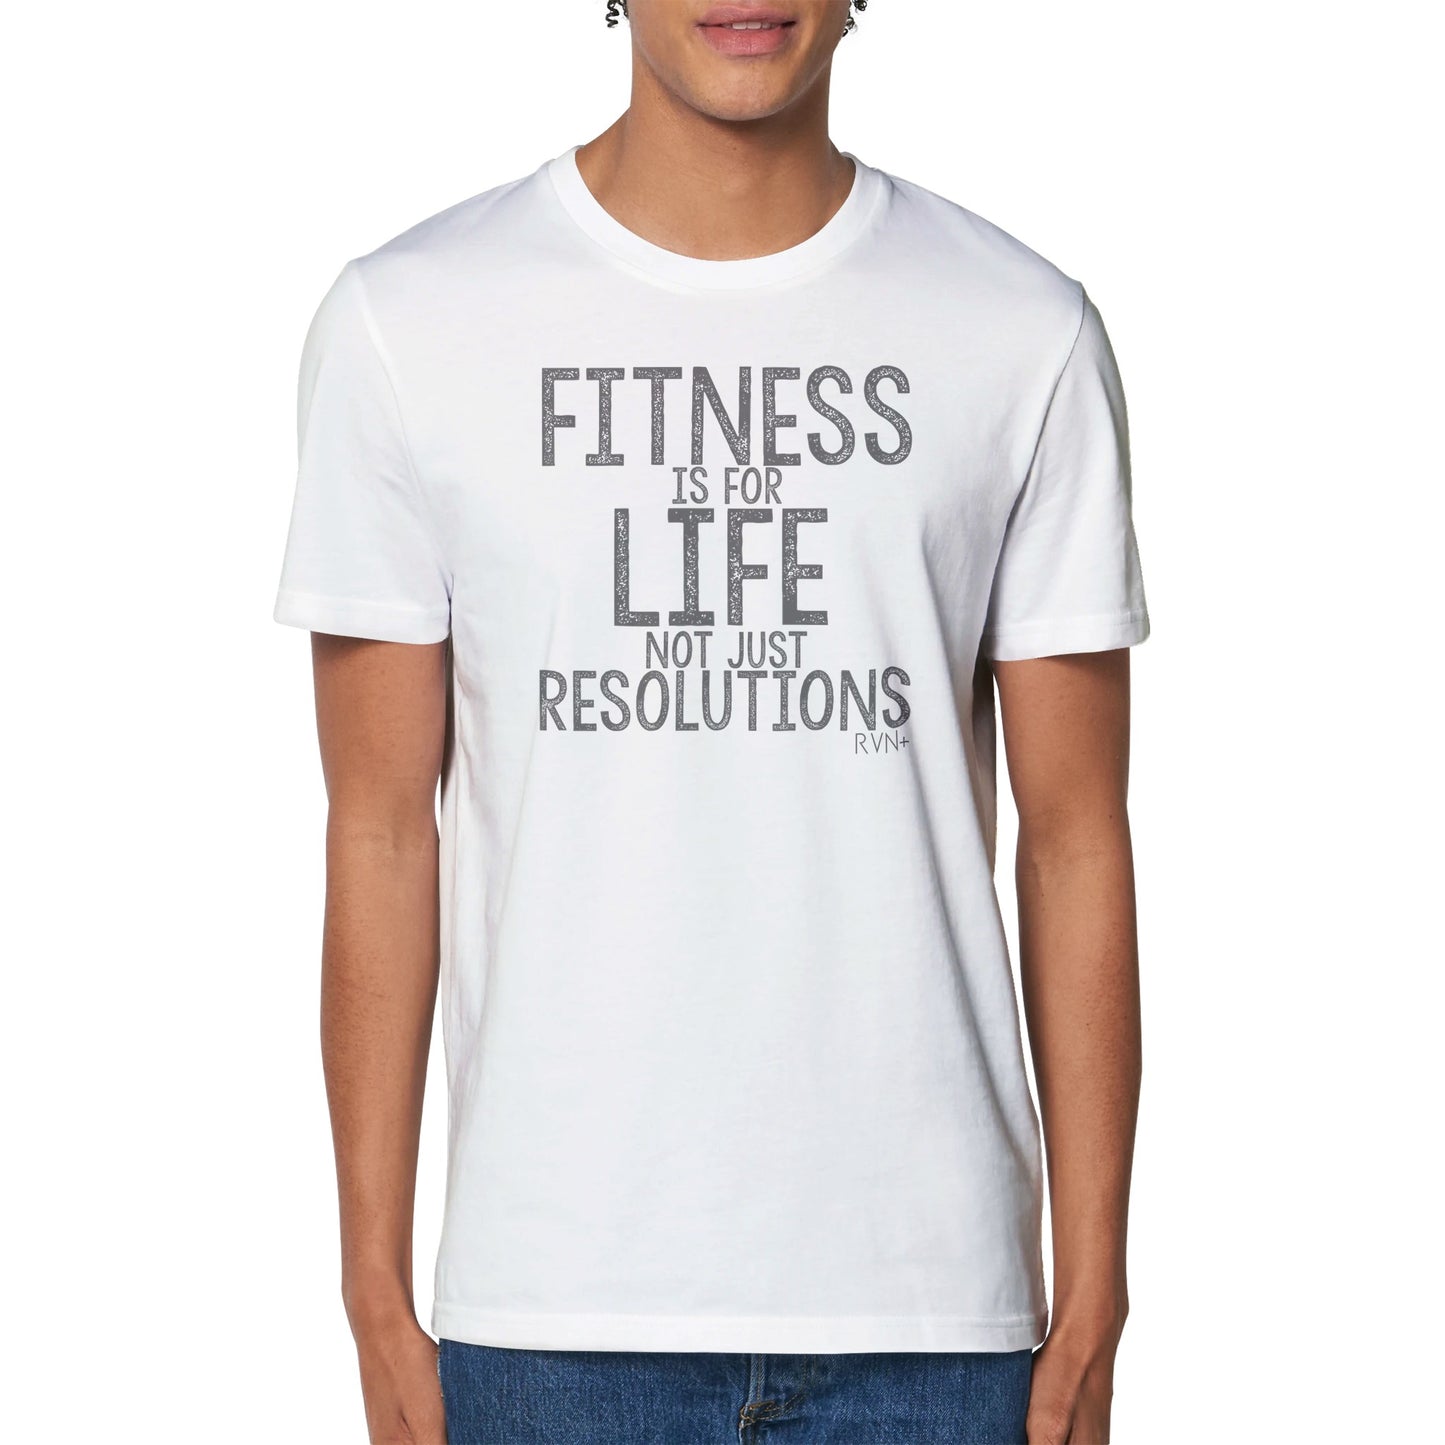 Fitness Life Resolutions - Organic Unisex Tee